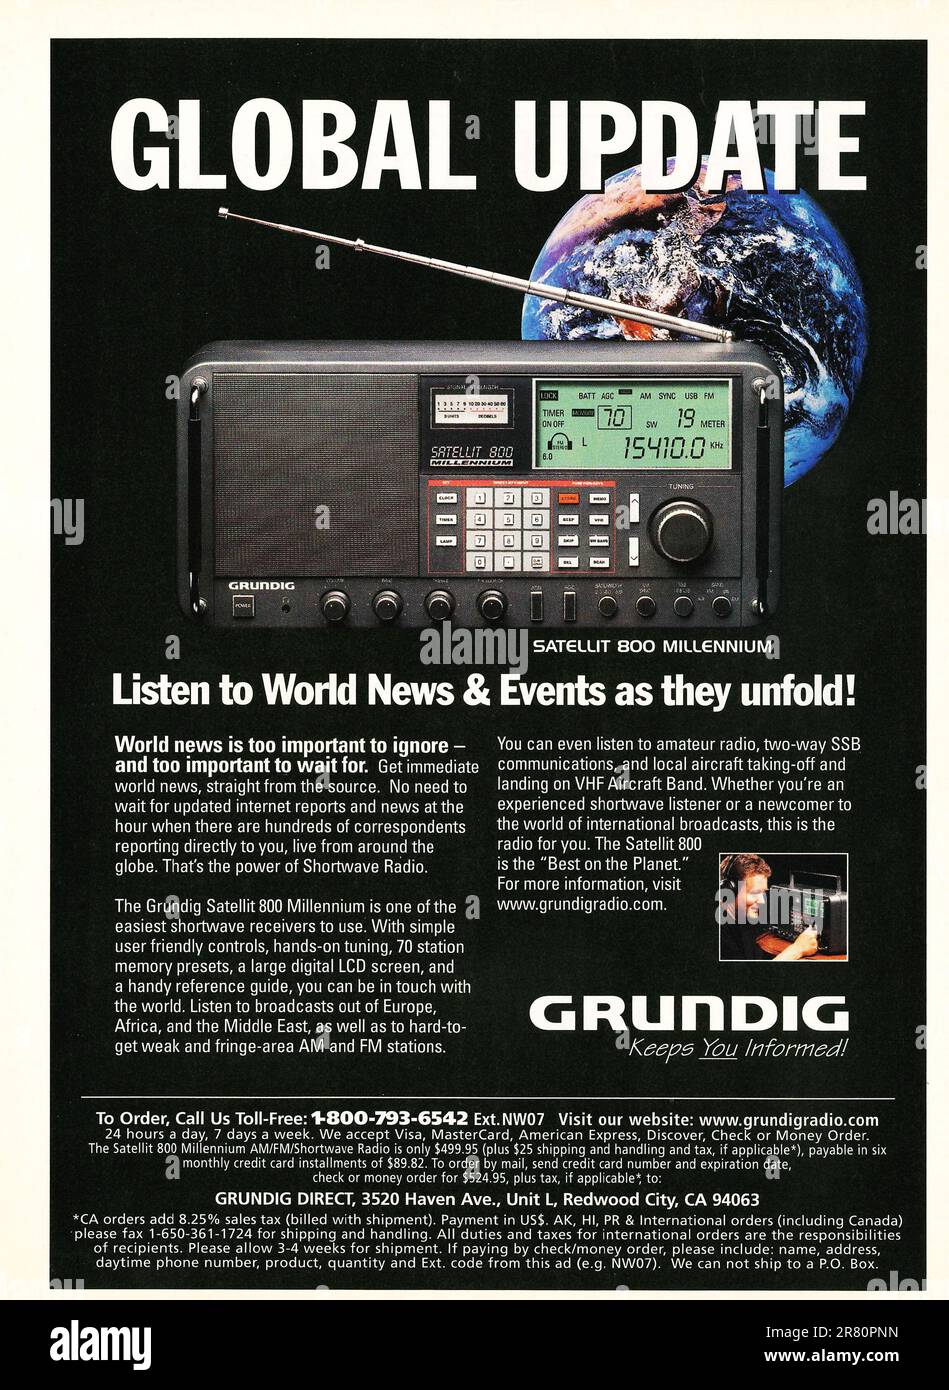 Grundig Satellit 800 radio advert in a magazine  June 2002 Stock Photo